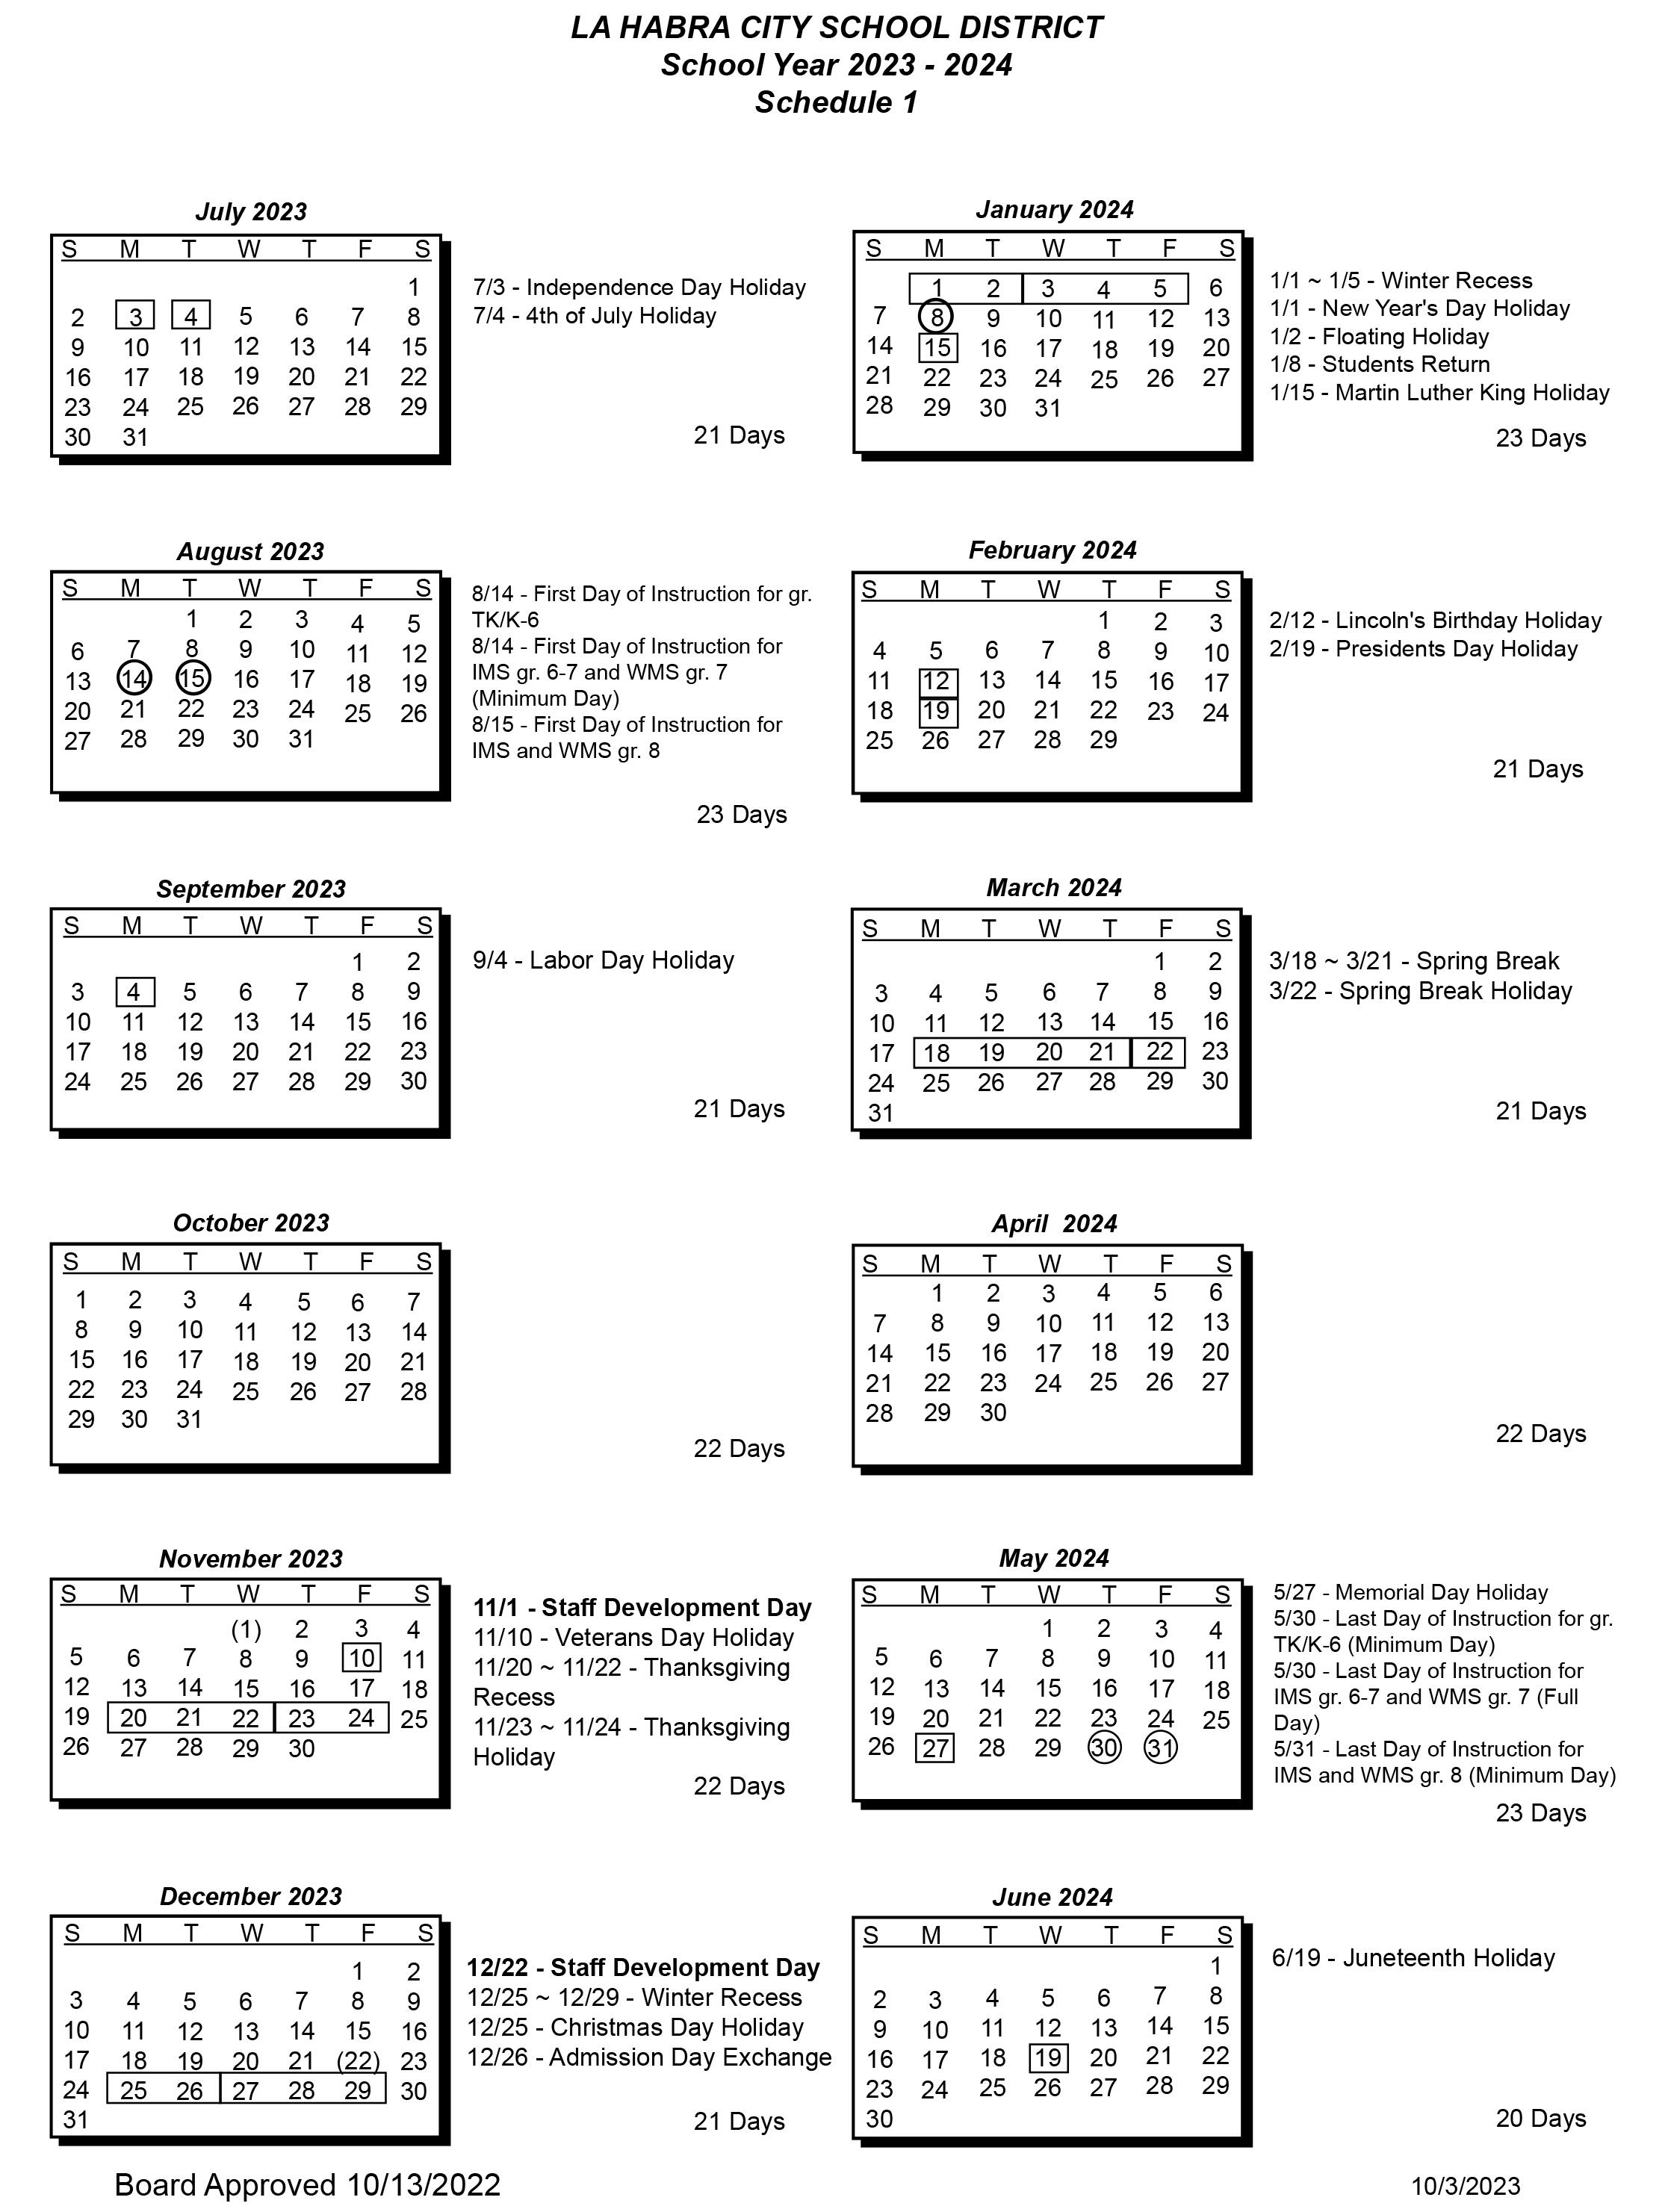 School Year Calendar Schedule 1